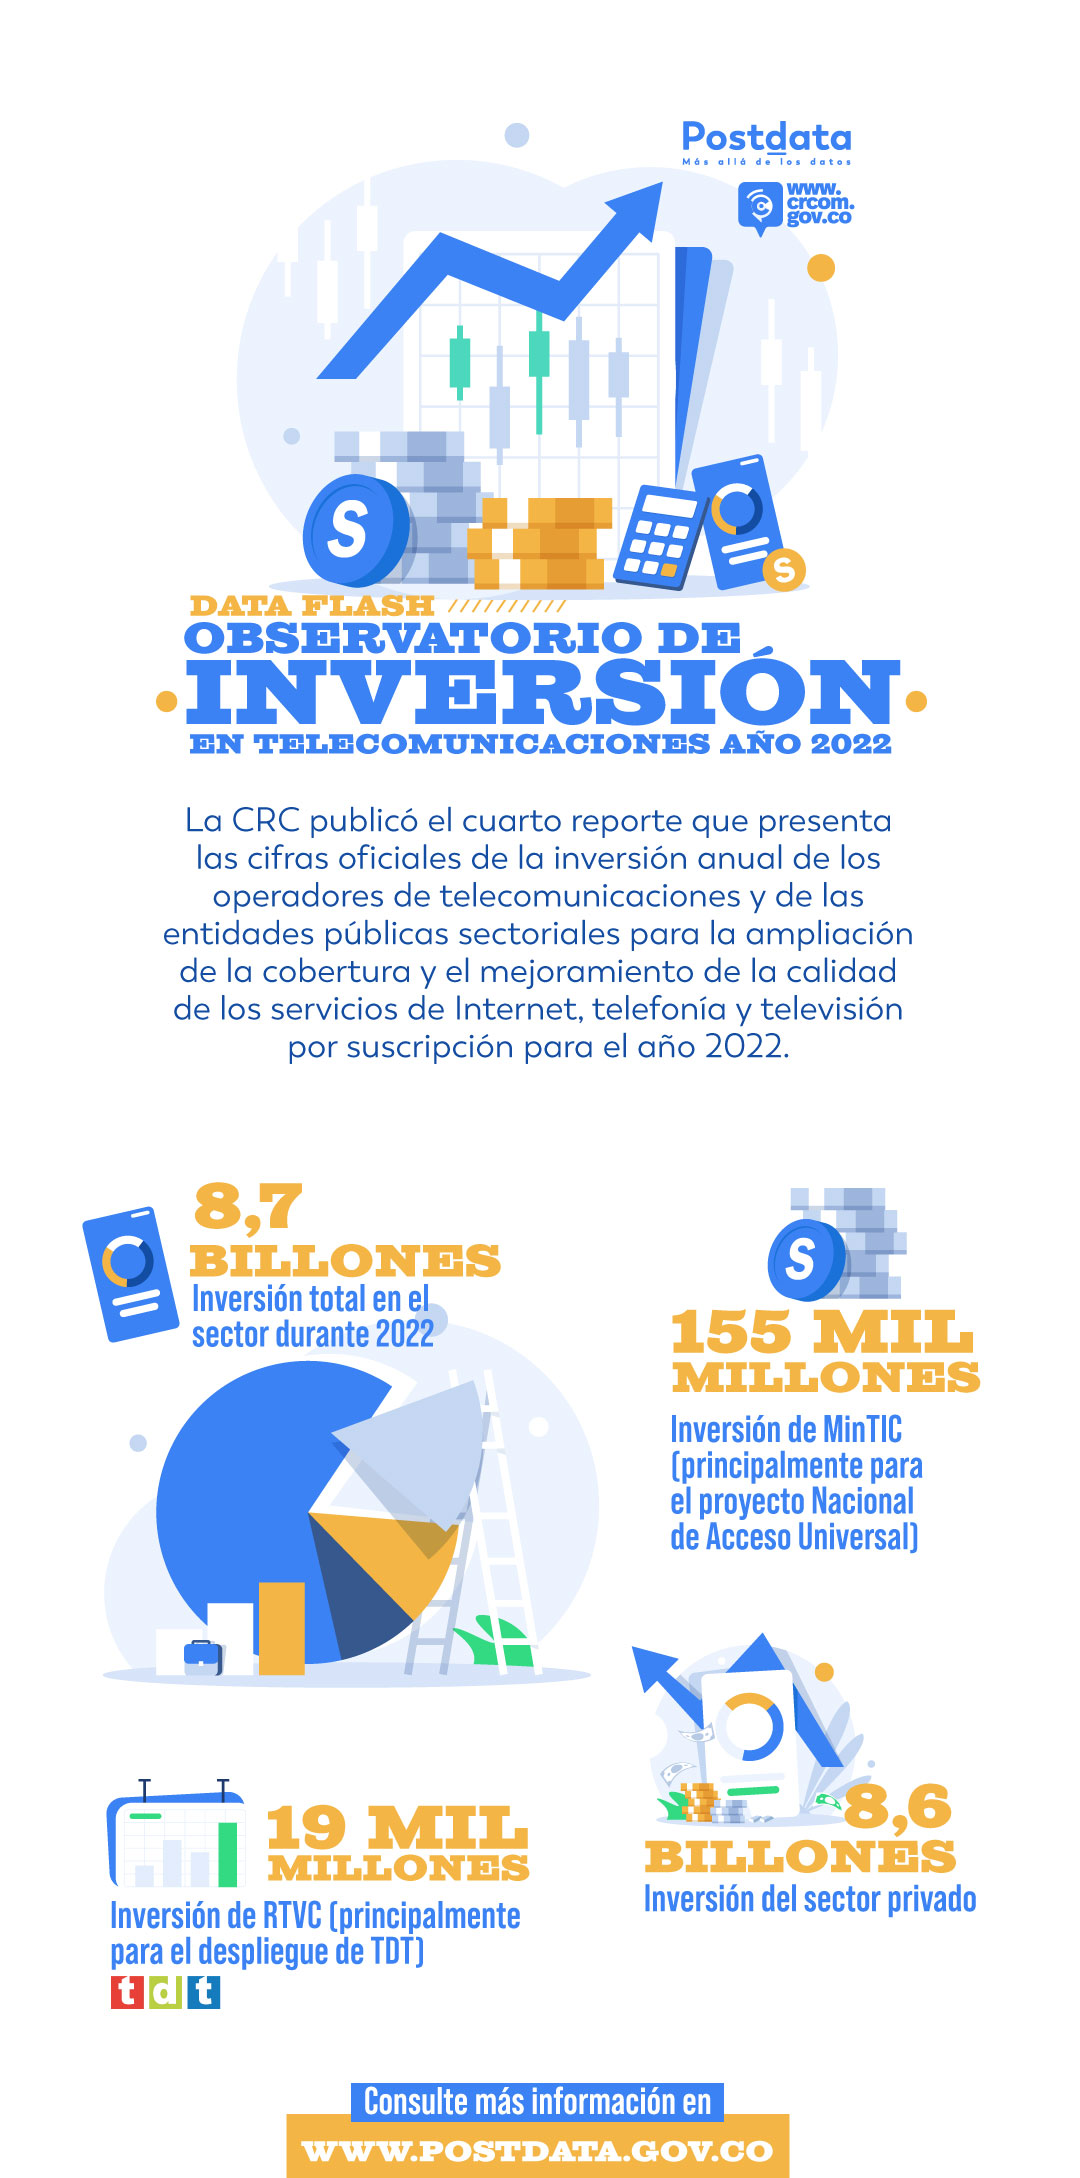 Inversión en el sector de telecomunicaciones ascendió a 8,7 billones de pesos en 2022